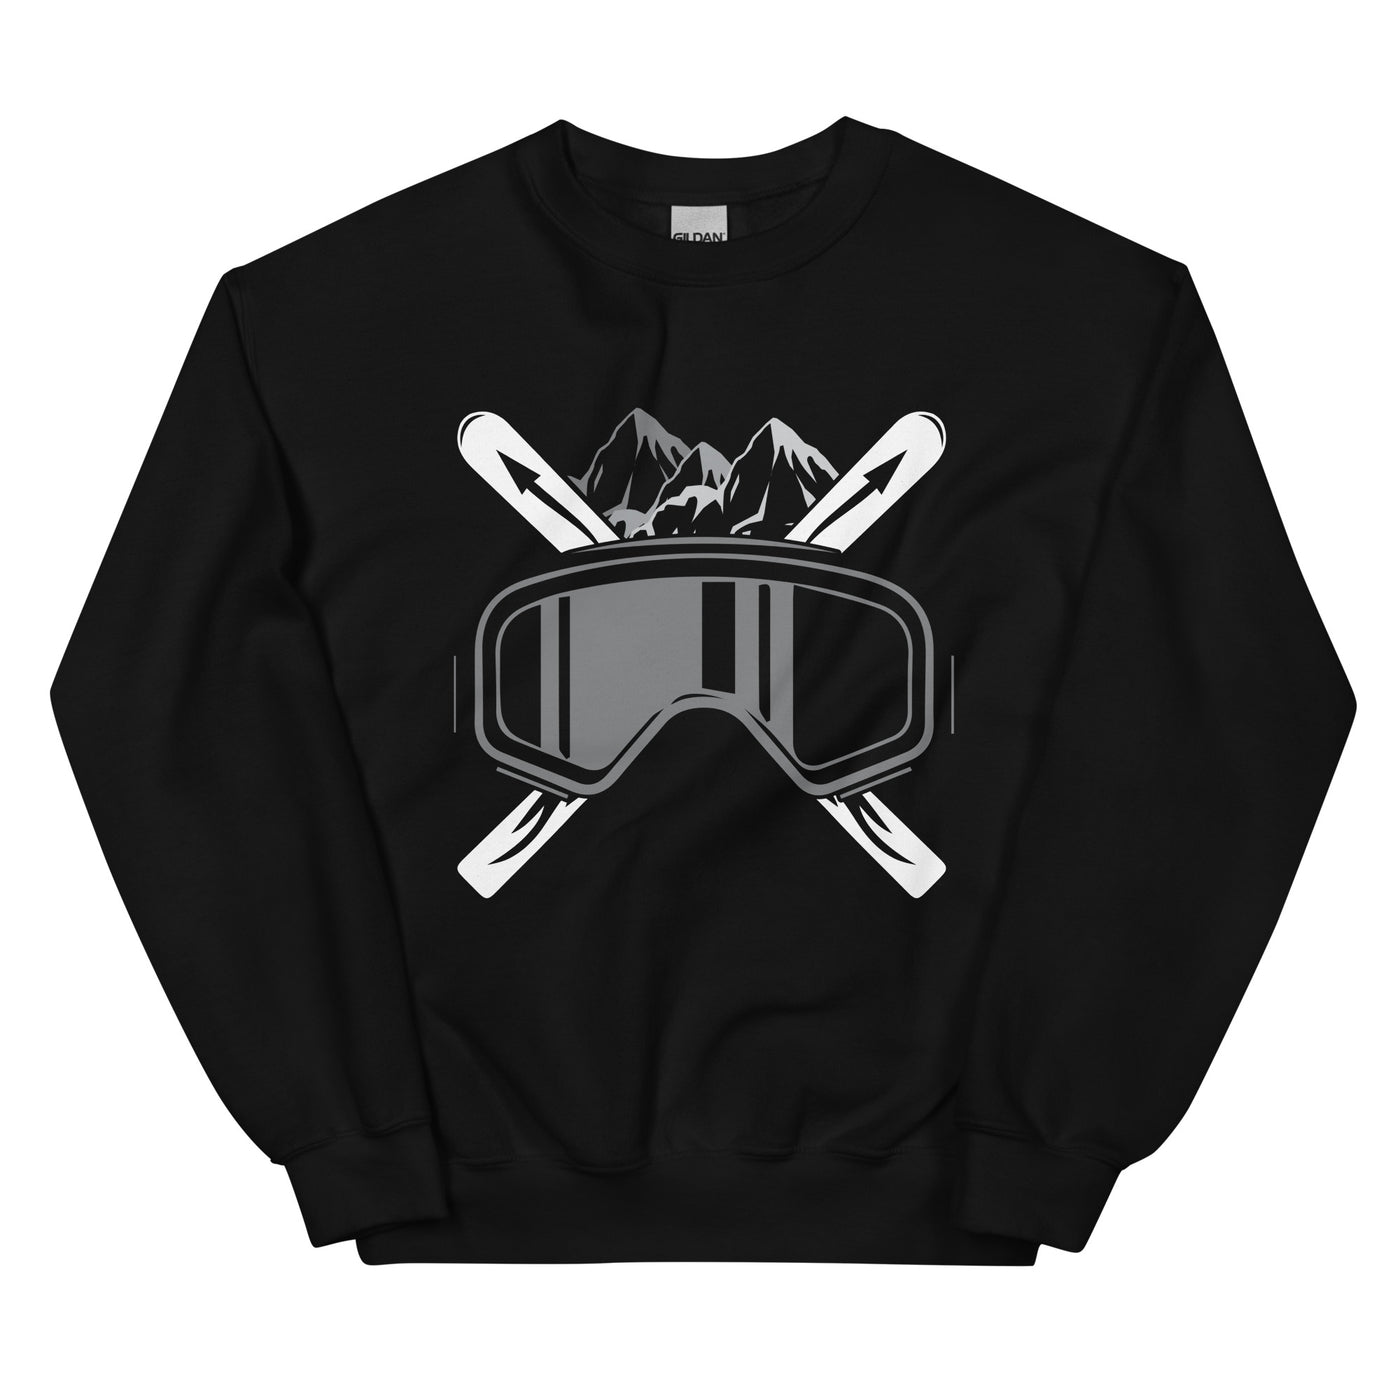 Schifoan - Sweatshirt (Unisex) klettern ski xxx yyy zzz Black